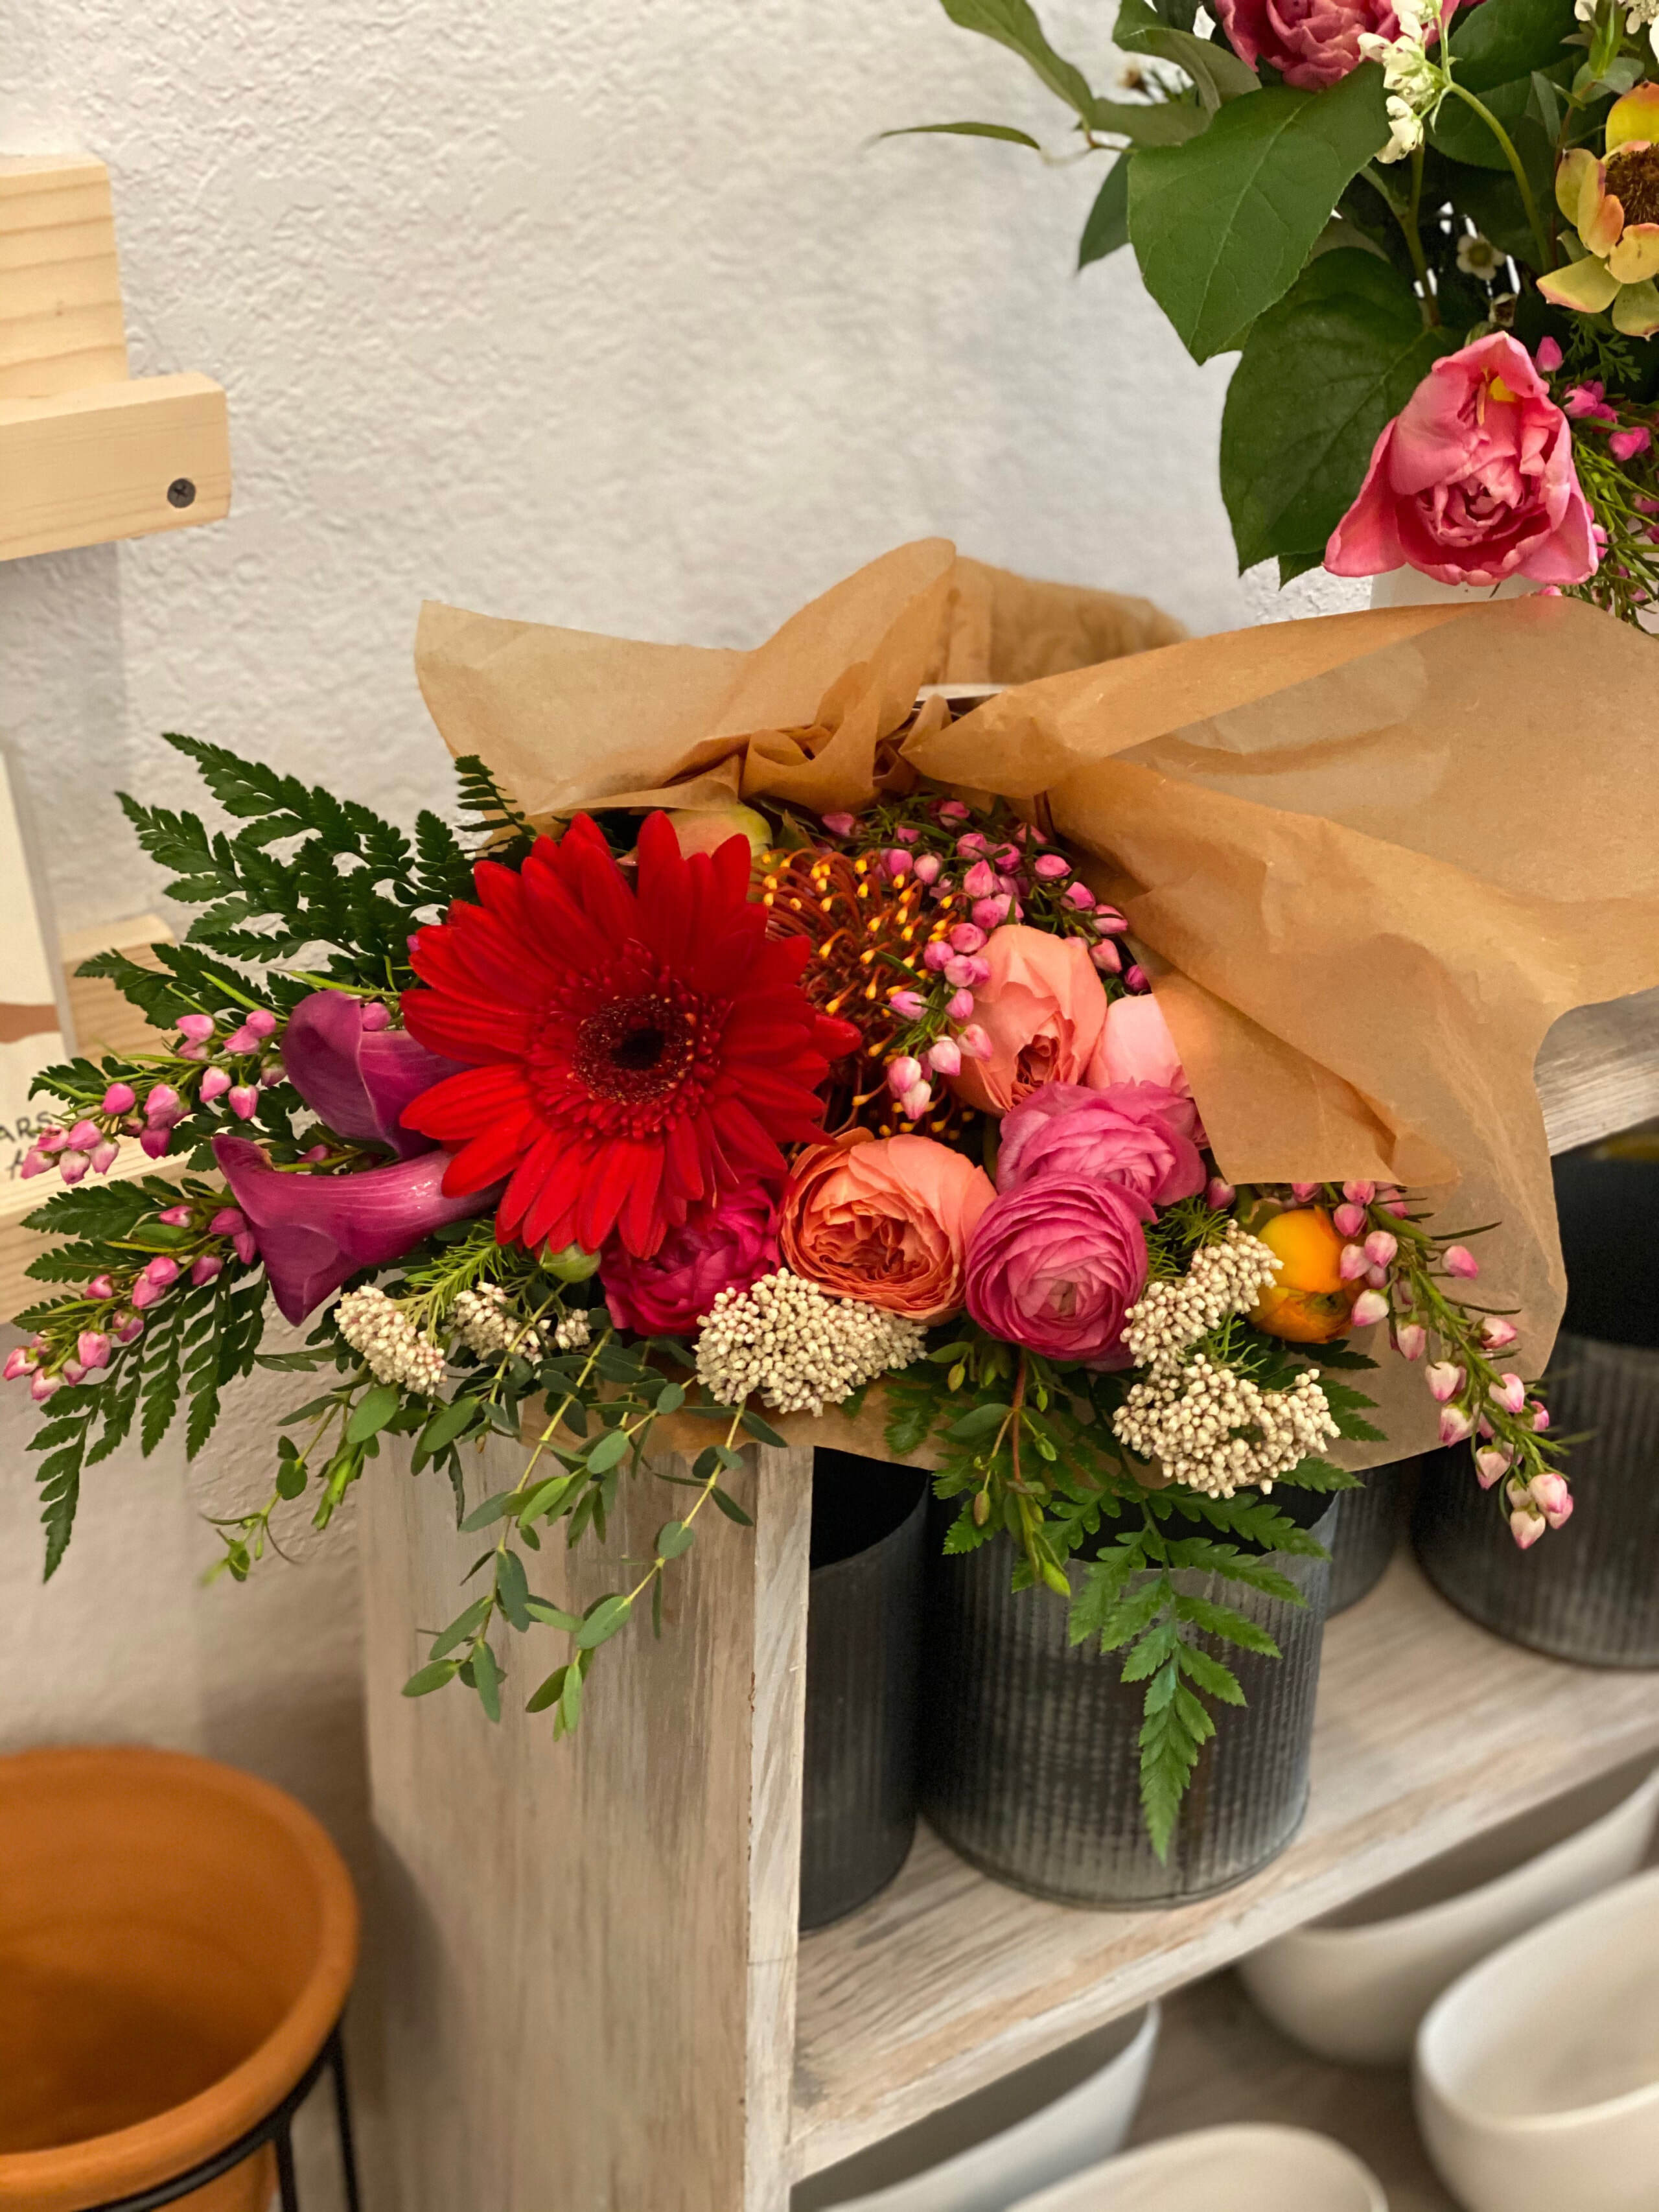 Small Wrap Bouquet  Daughter of Luna Floral Design LLC